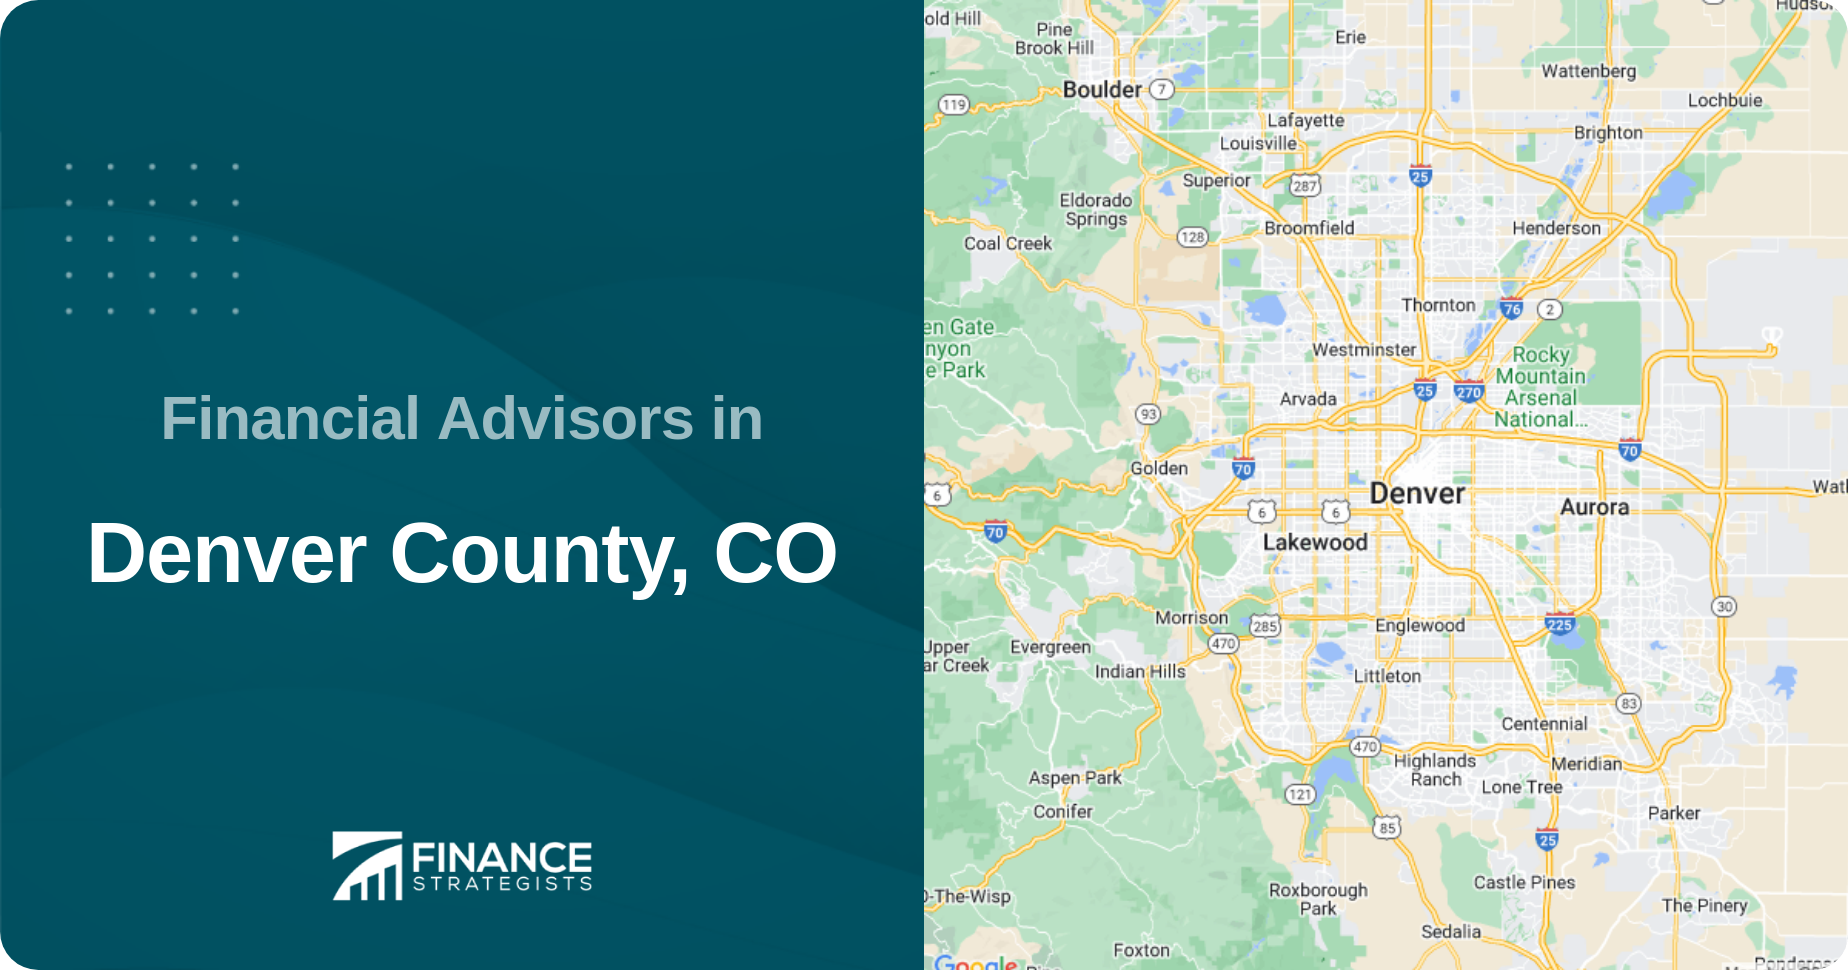 Financial Advisors in Denver County, CO